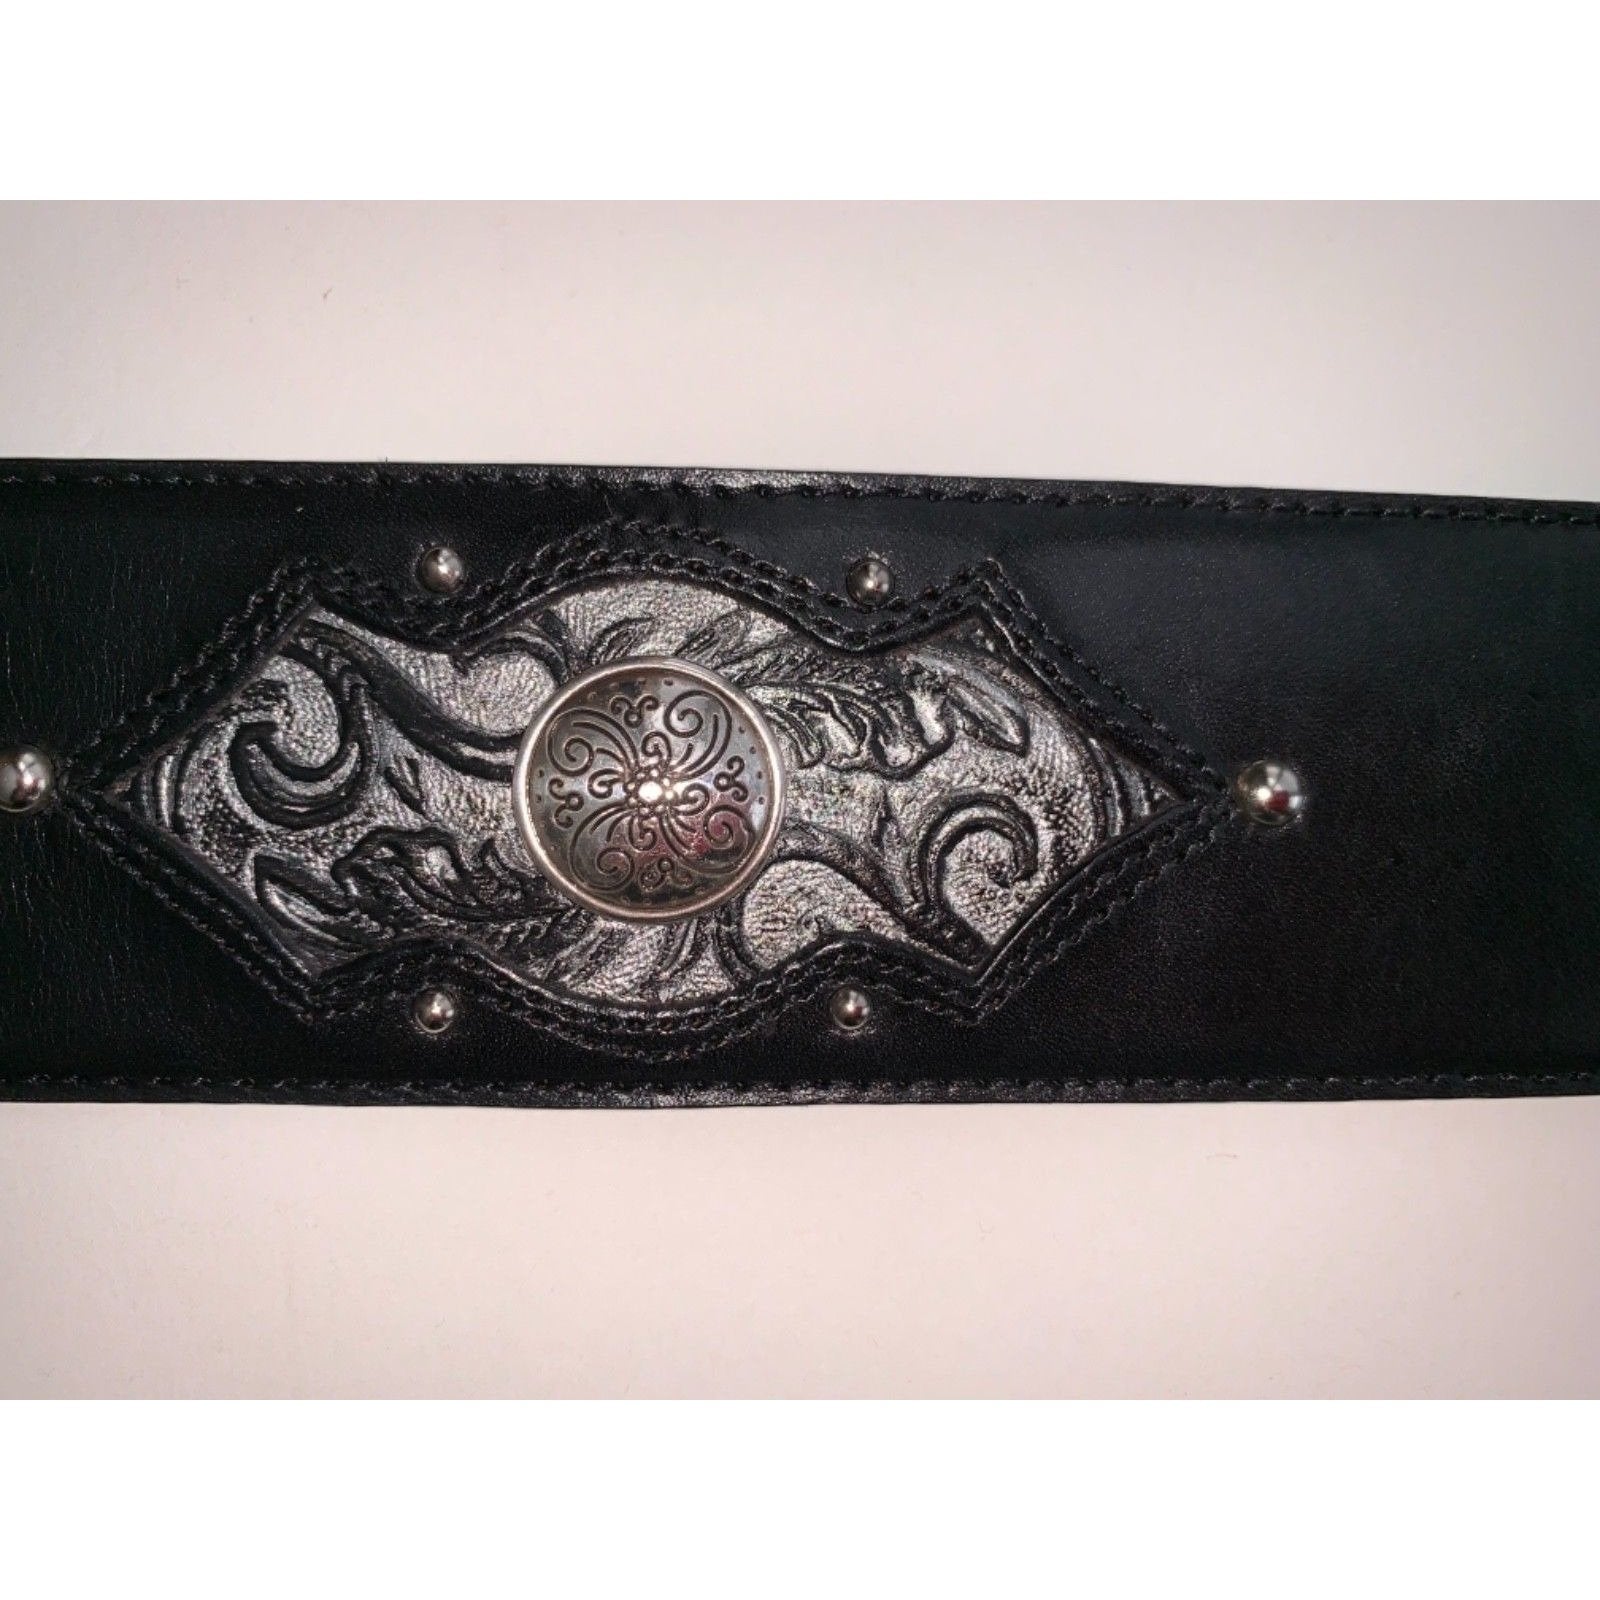 BRIGHTON M/L 32 wide black leather belt w/ lots of silver Burn Out western